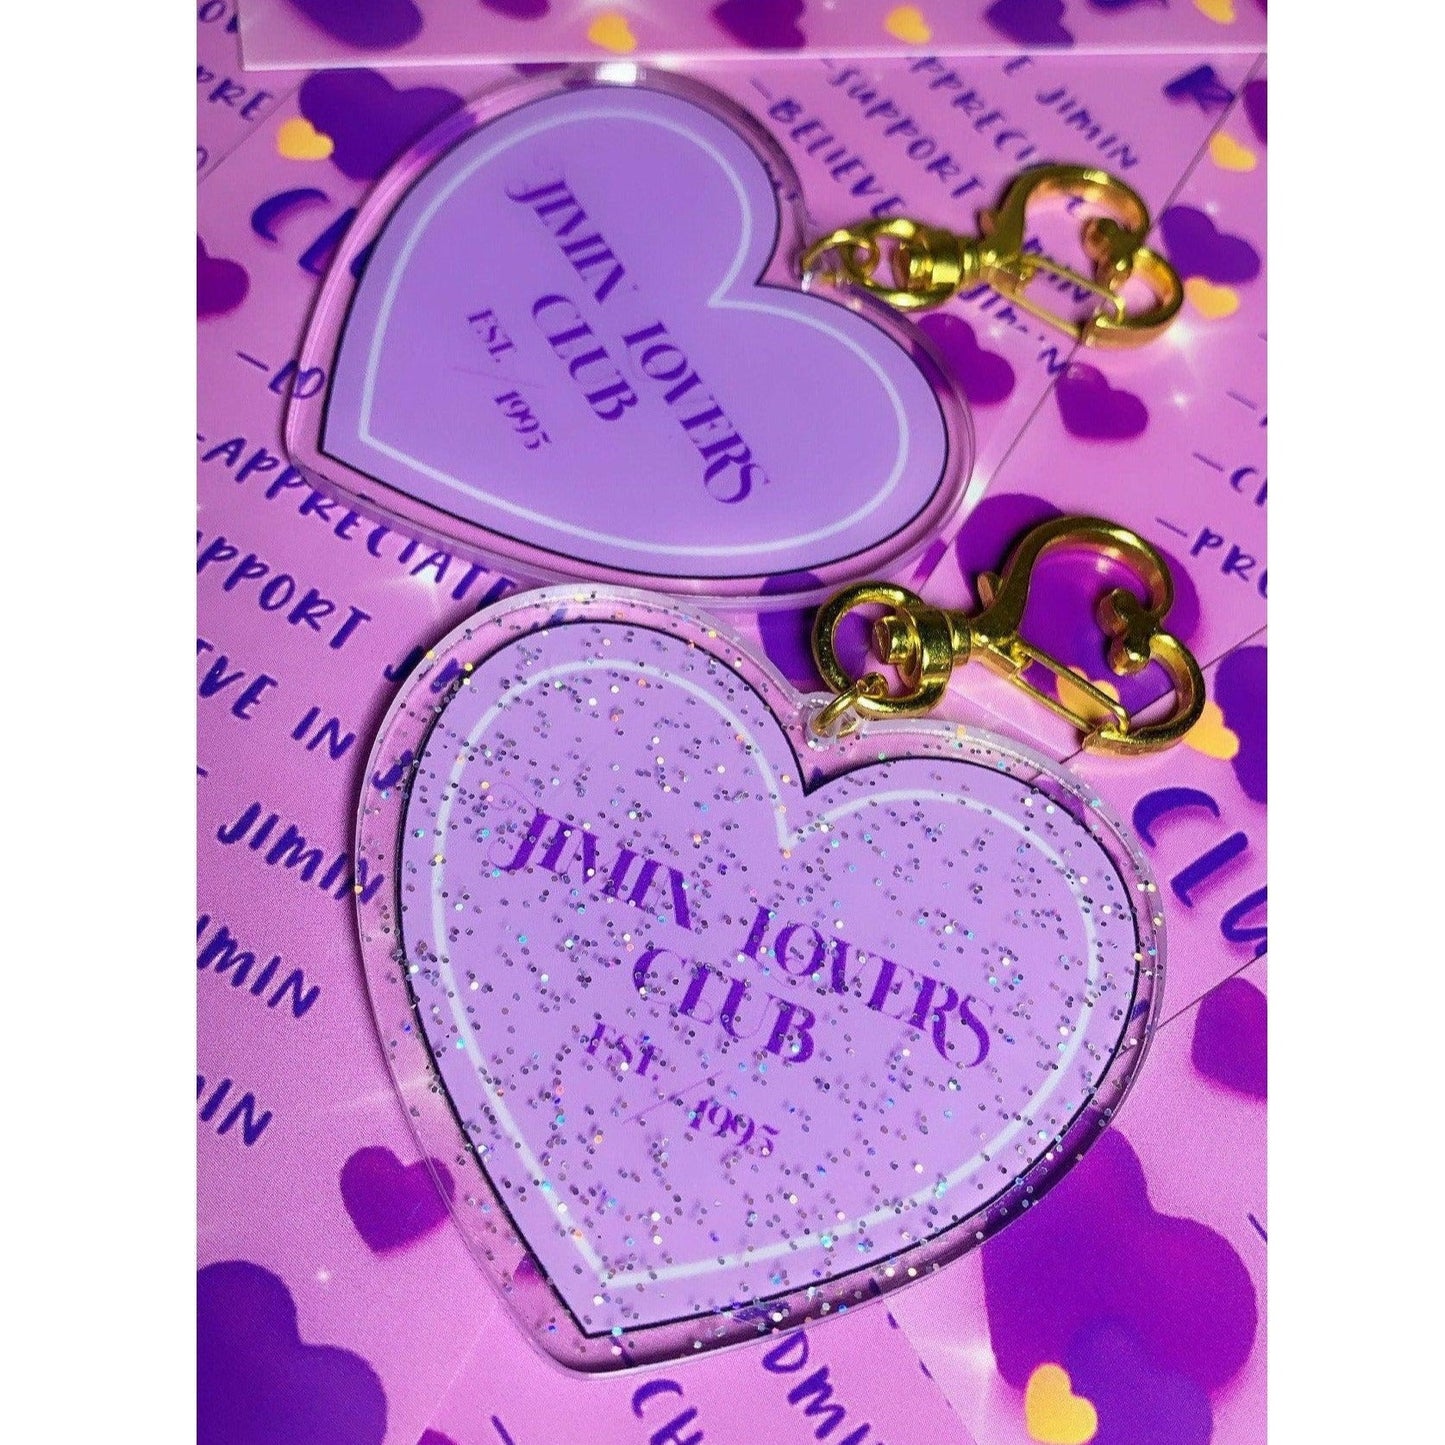 JIMIN Lovers Club Keychain - MilkBunn Co. Jimin from BTS inspired keychain. Purple glitter and clear acrylic heart keychain